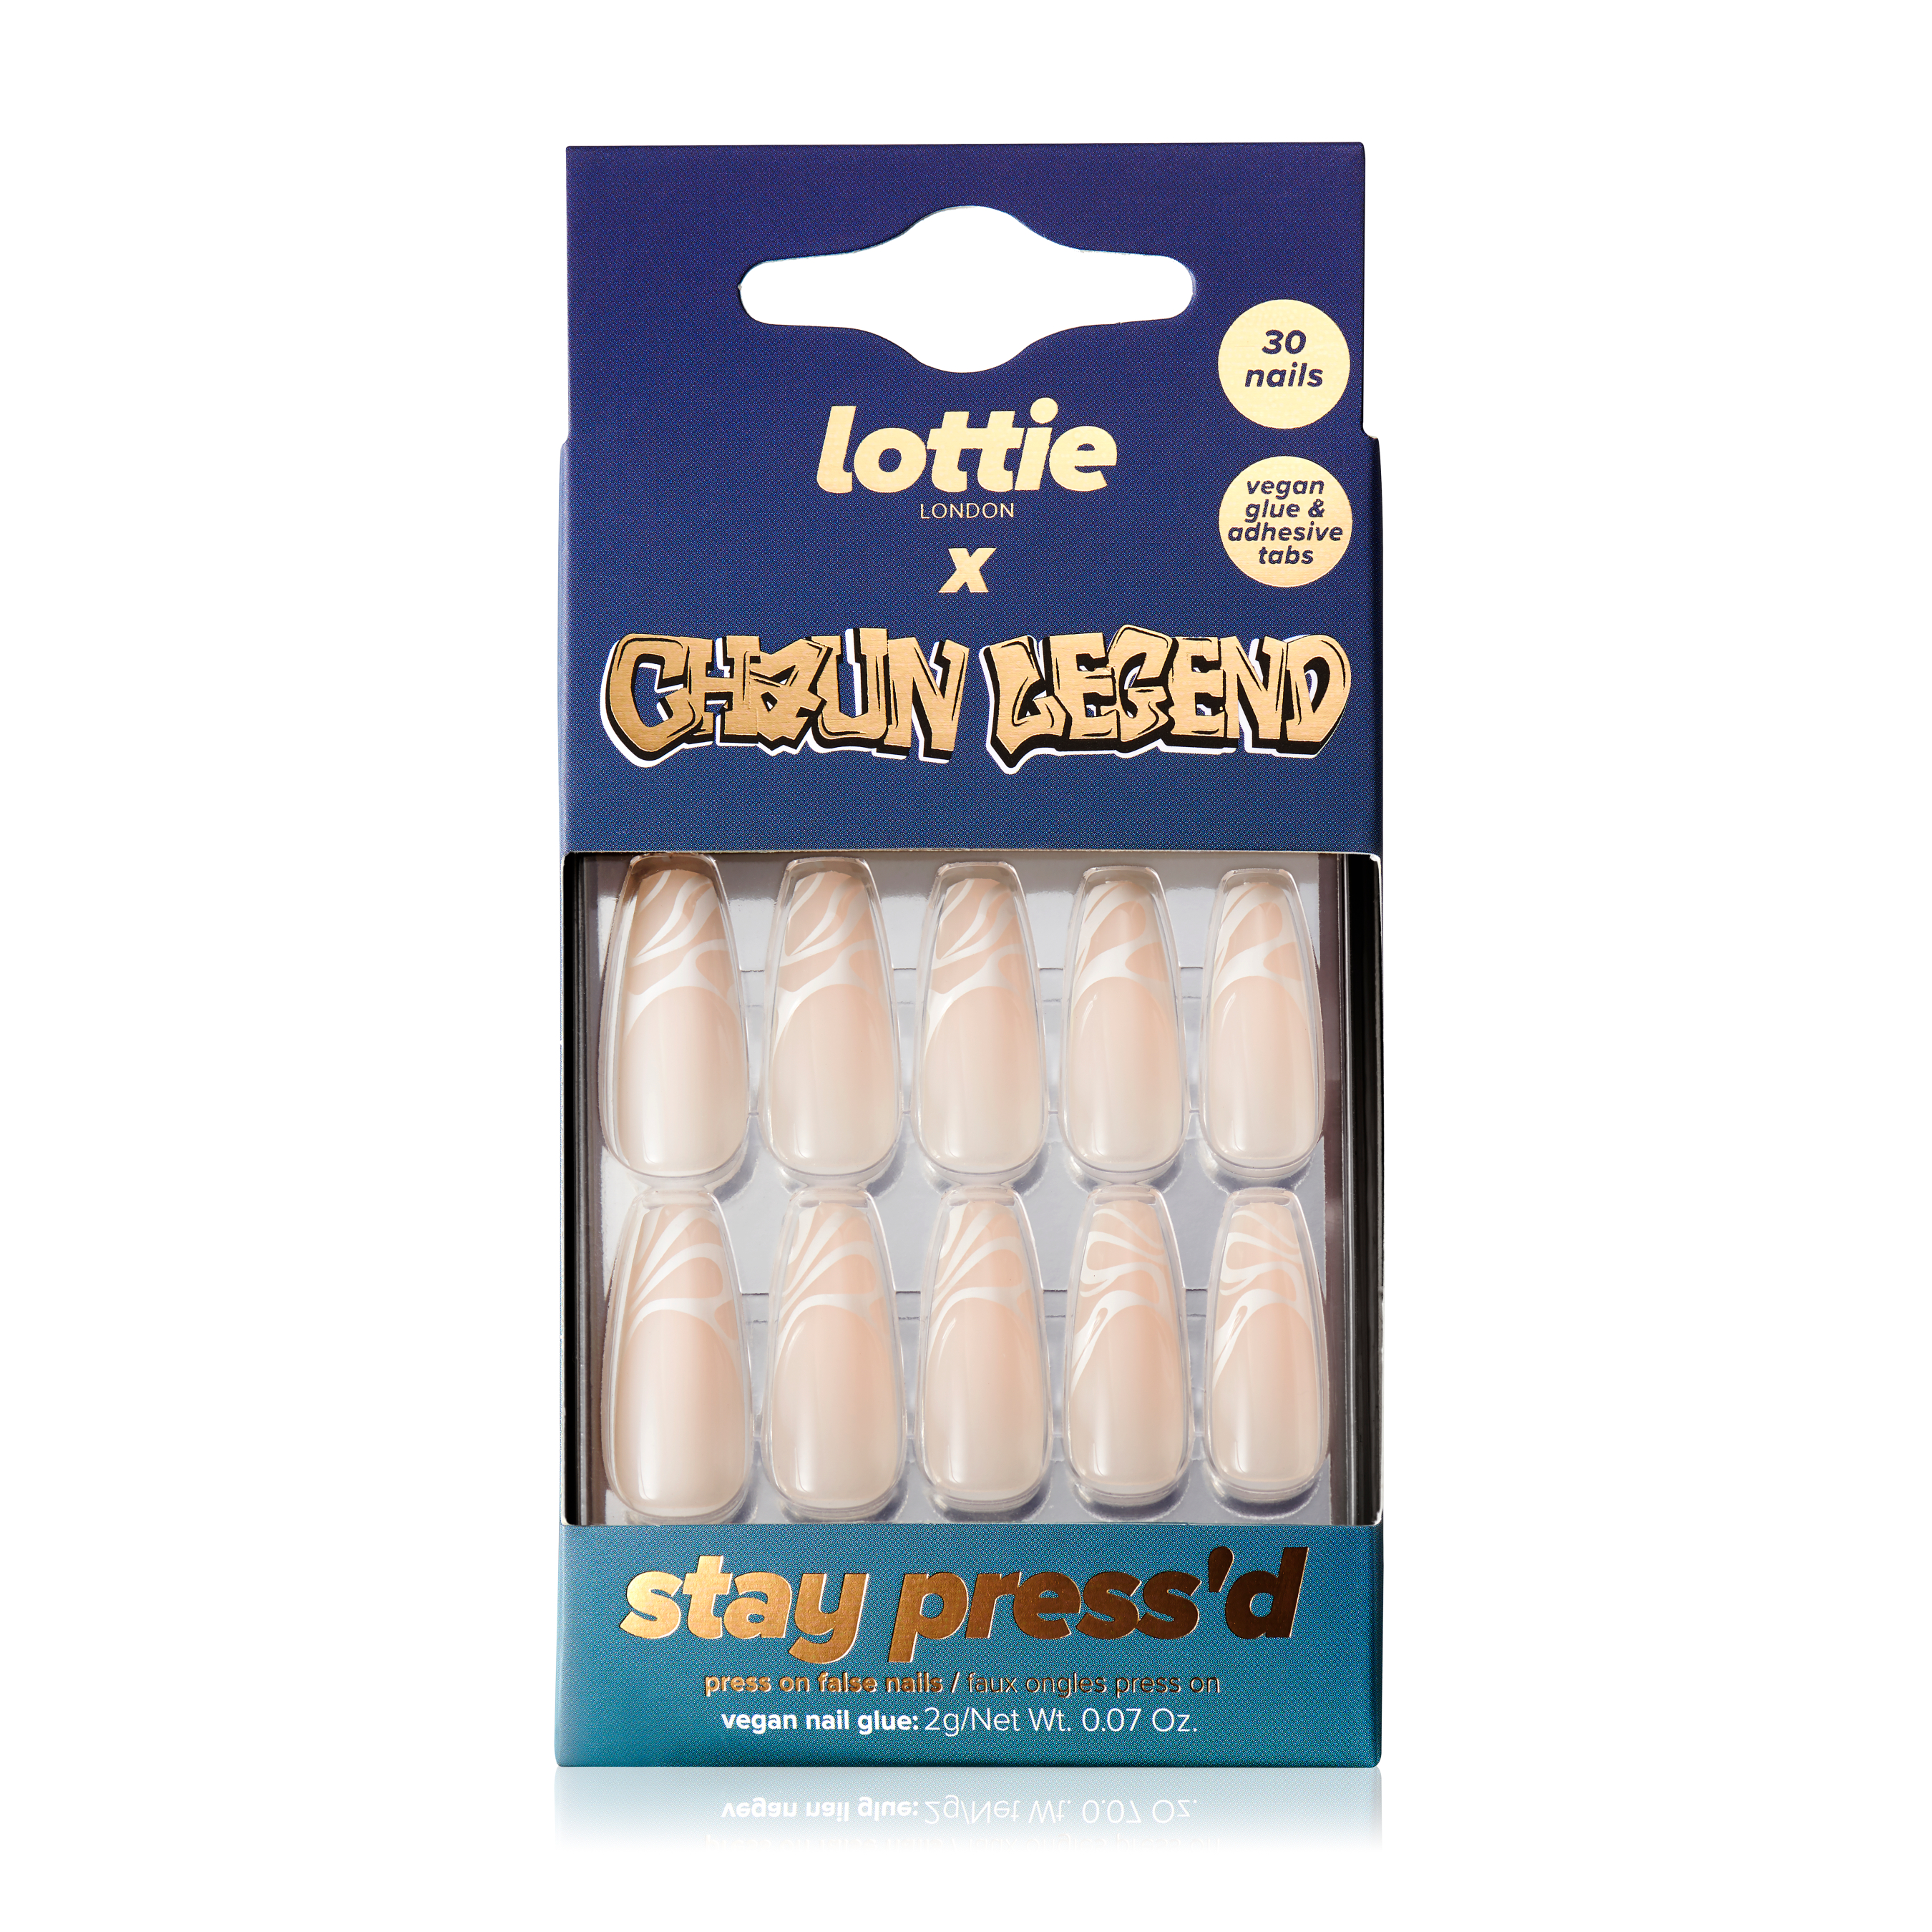 Lottie London x Chaun Legend Stay Press'd, Press On Nail Set, French Twist, 30 Coffin Shape Nails - image 3 of 11